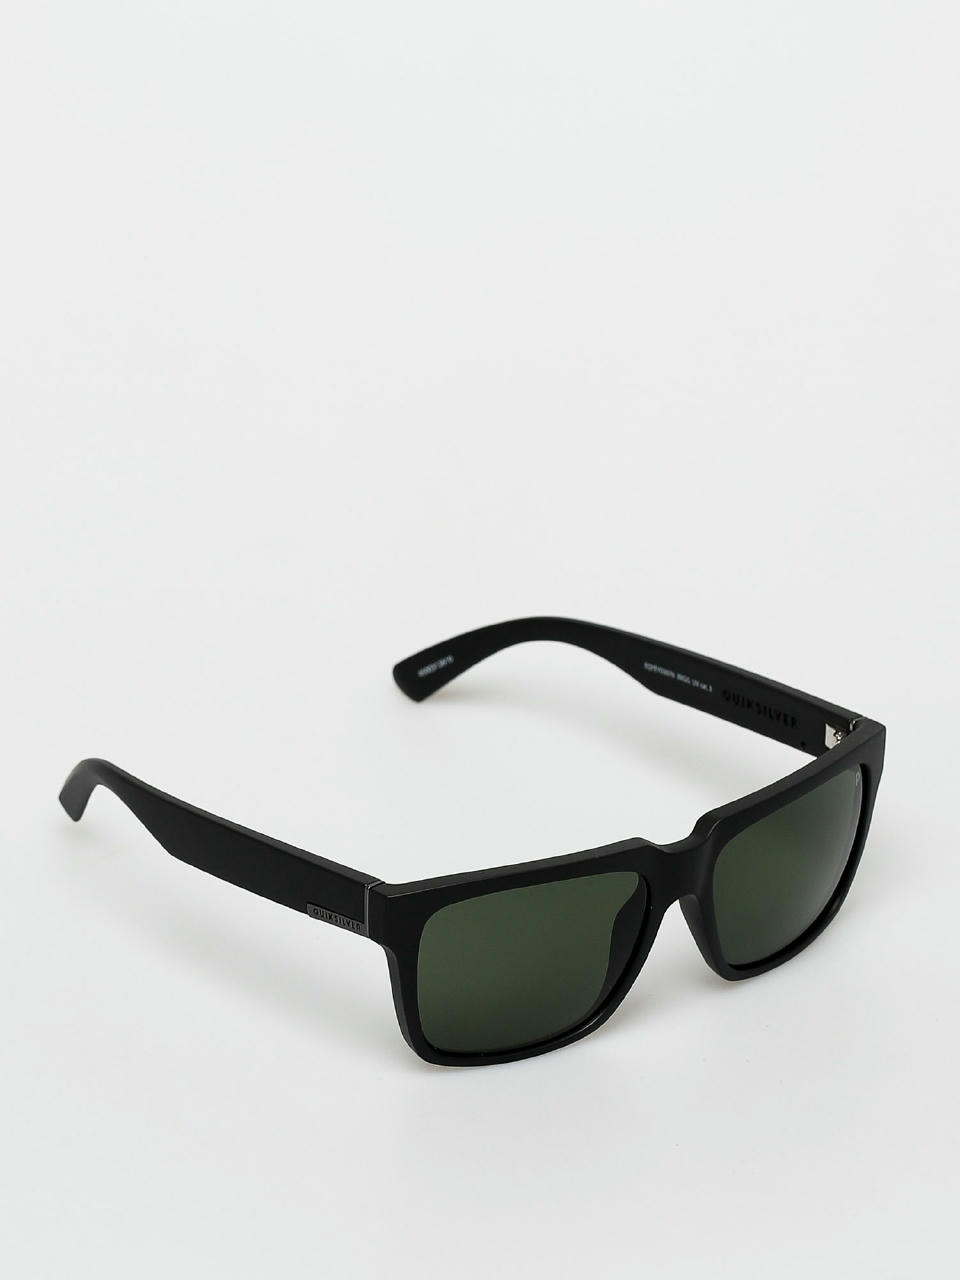 Polarized black/green p) (matte Quiksilver Bruiser Sunglasses